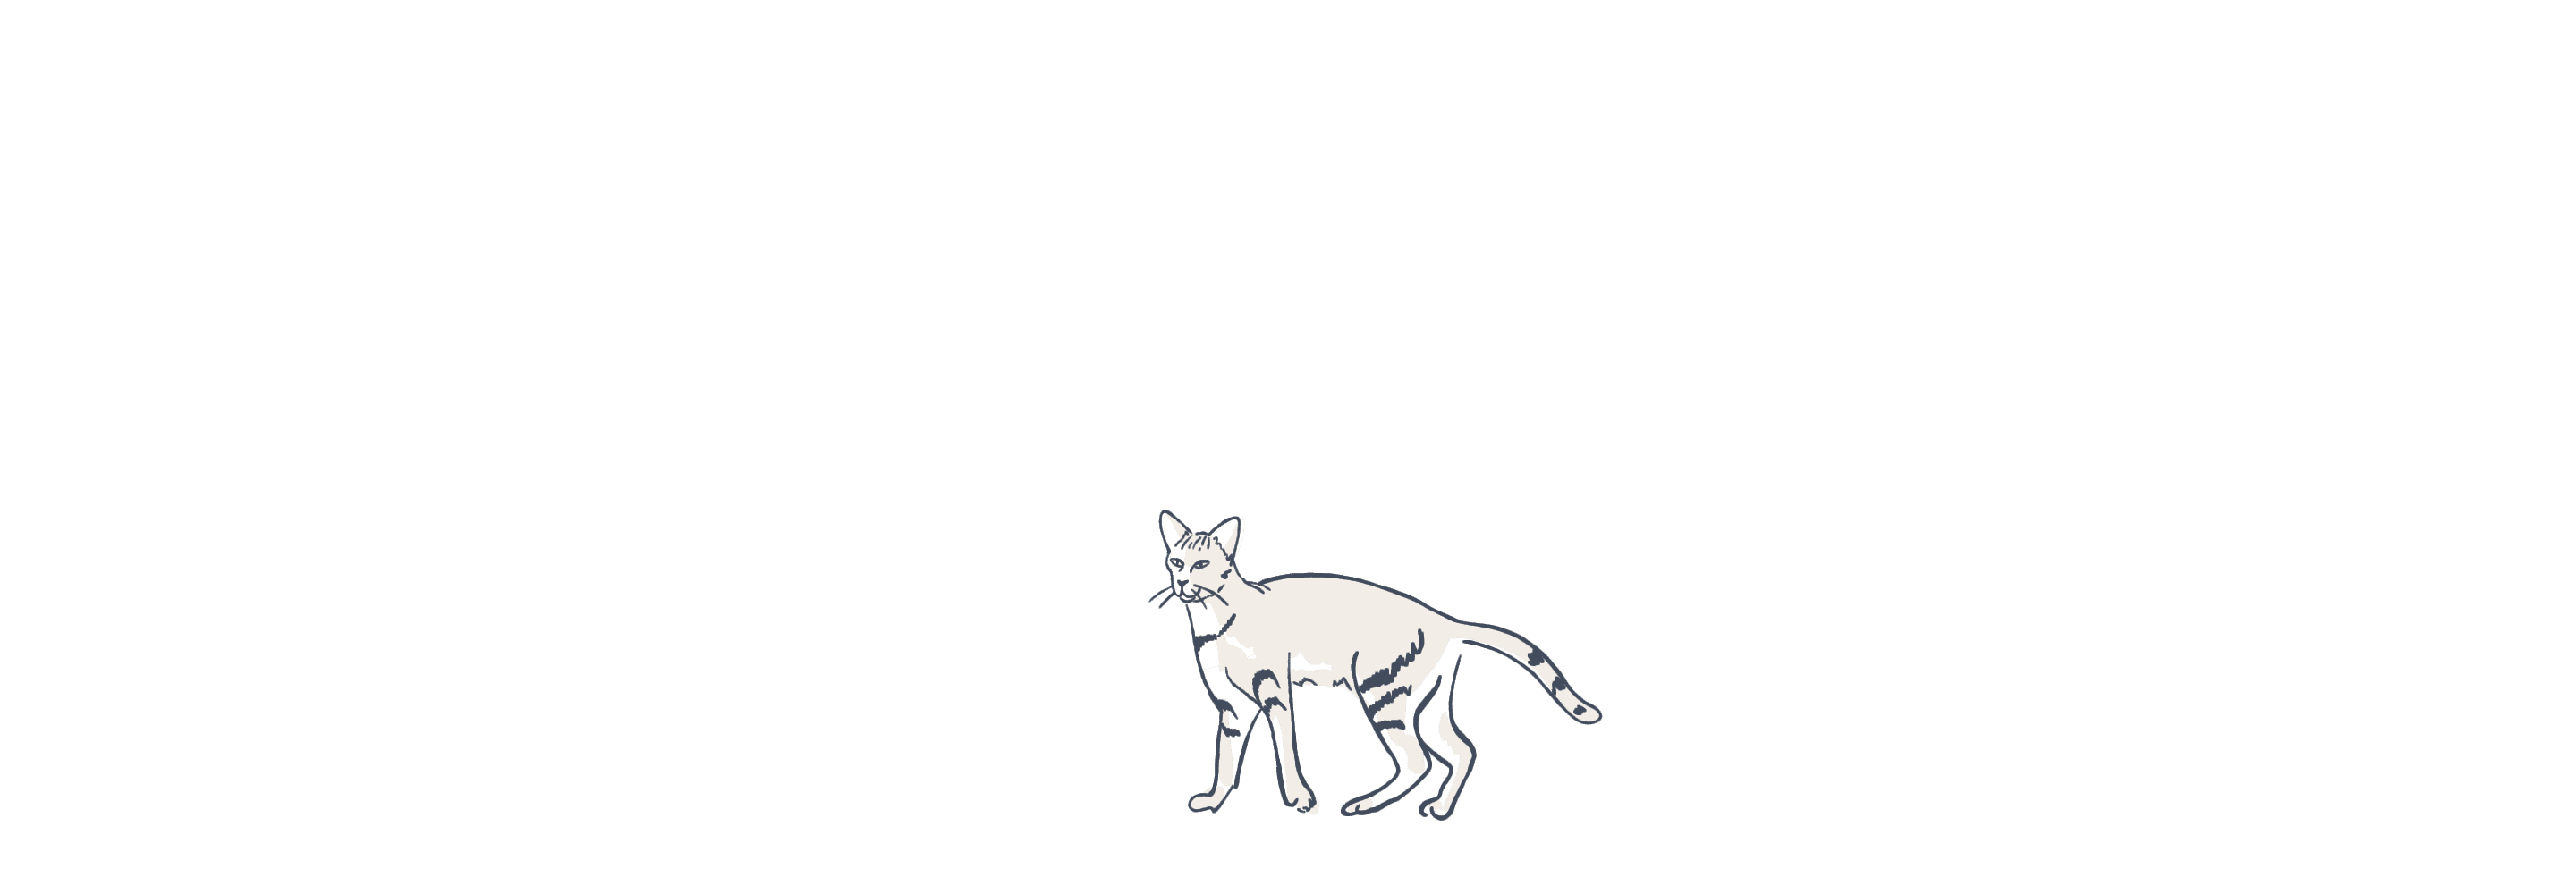 Cat illustration loop